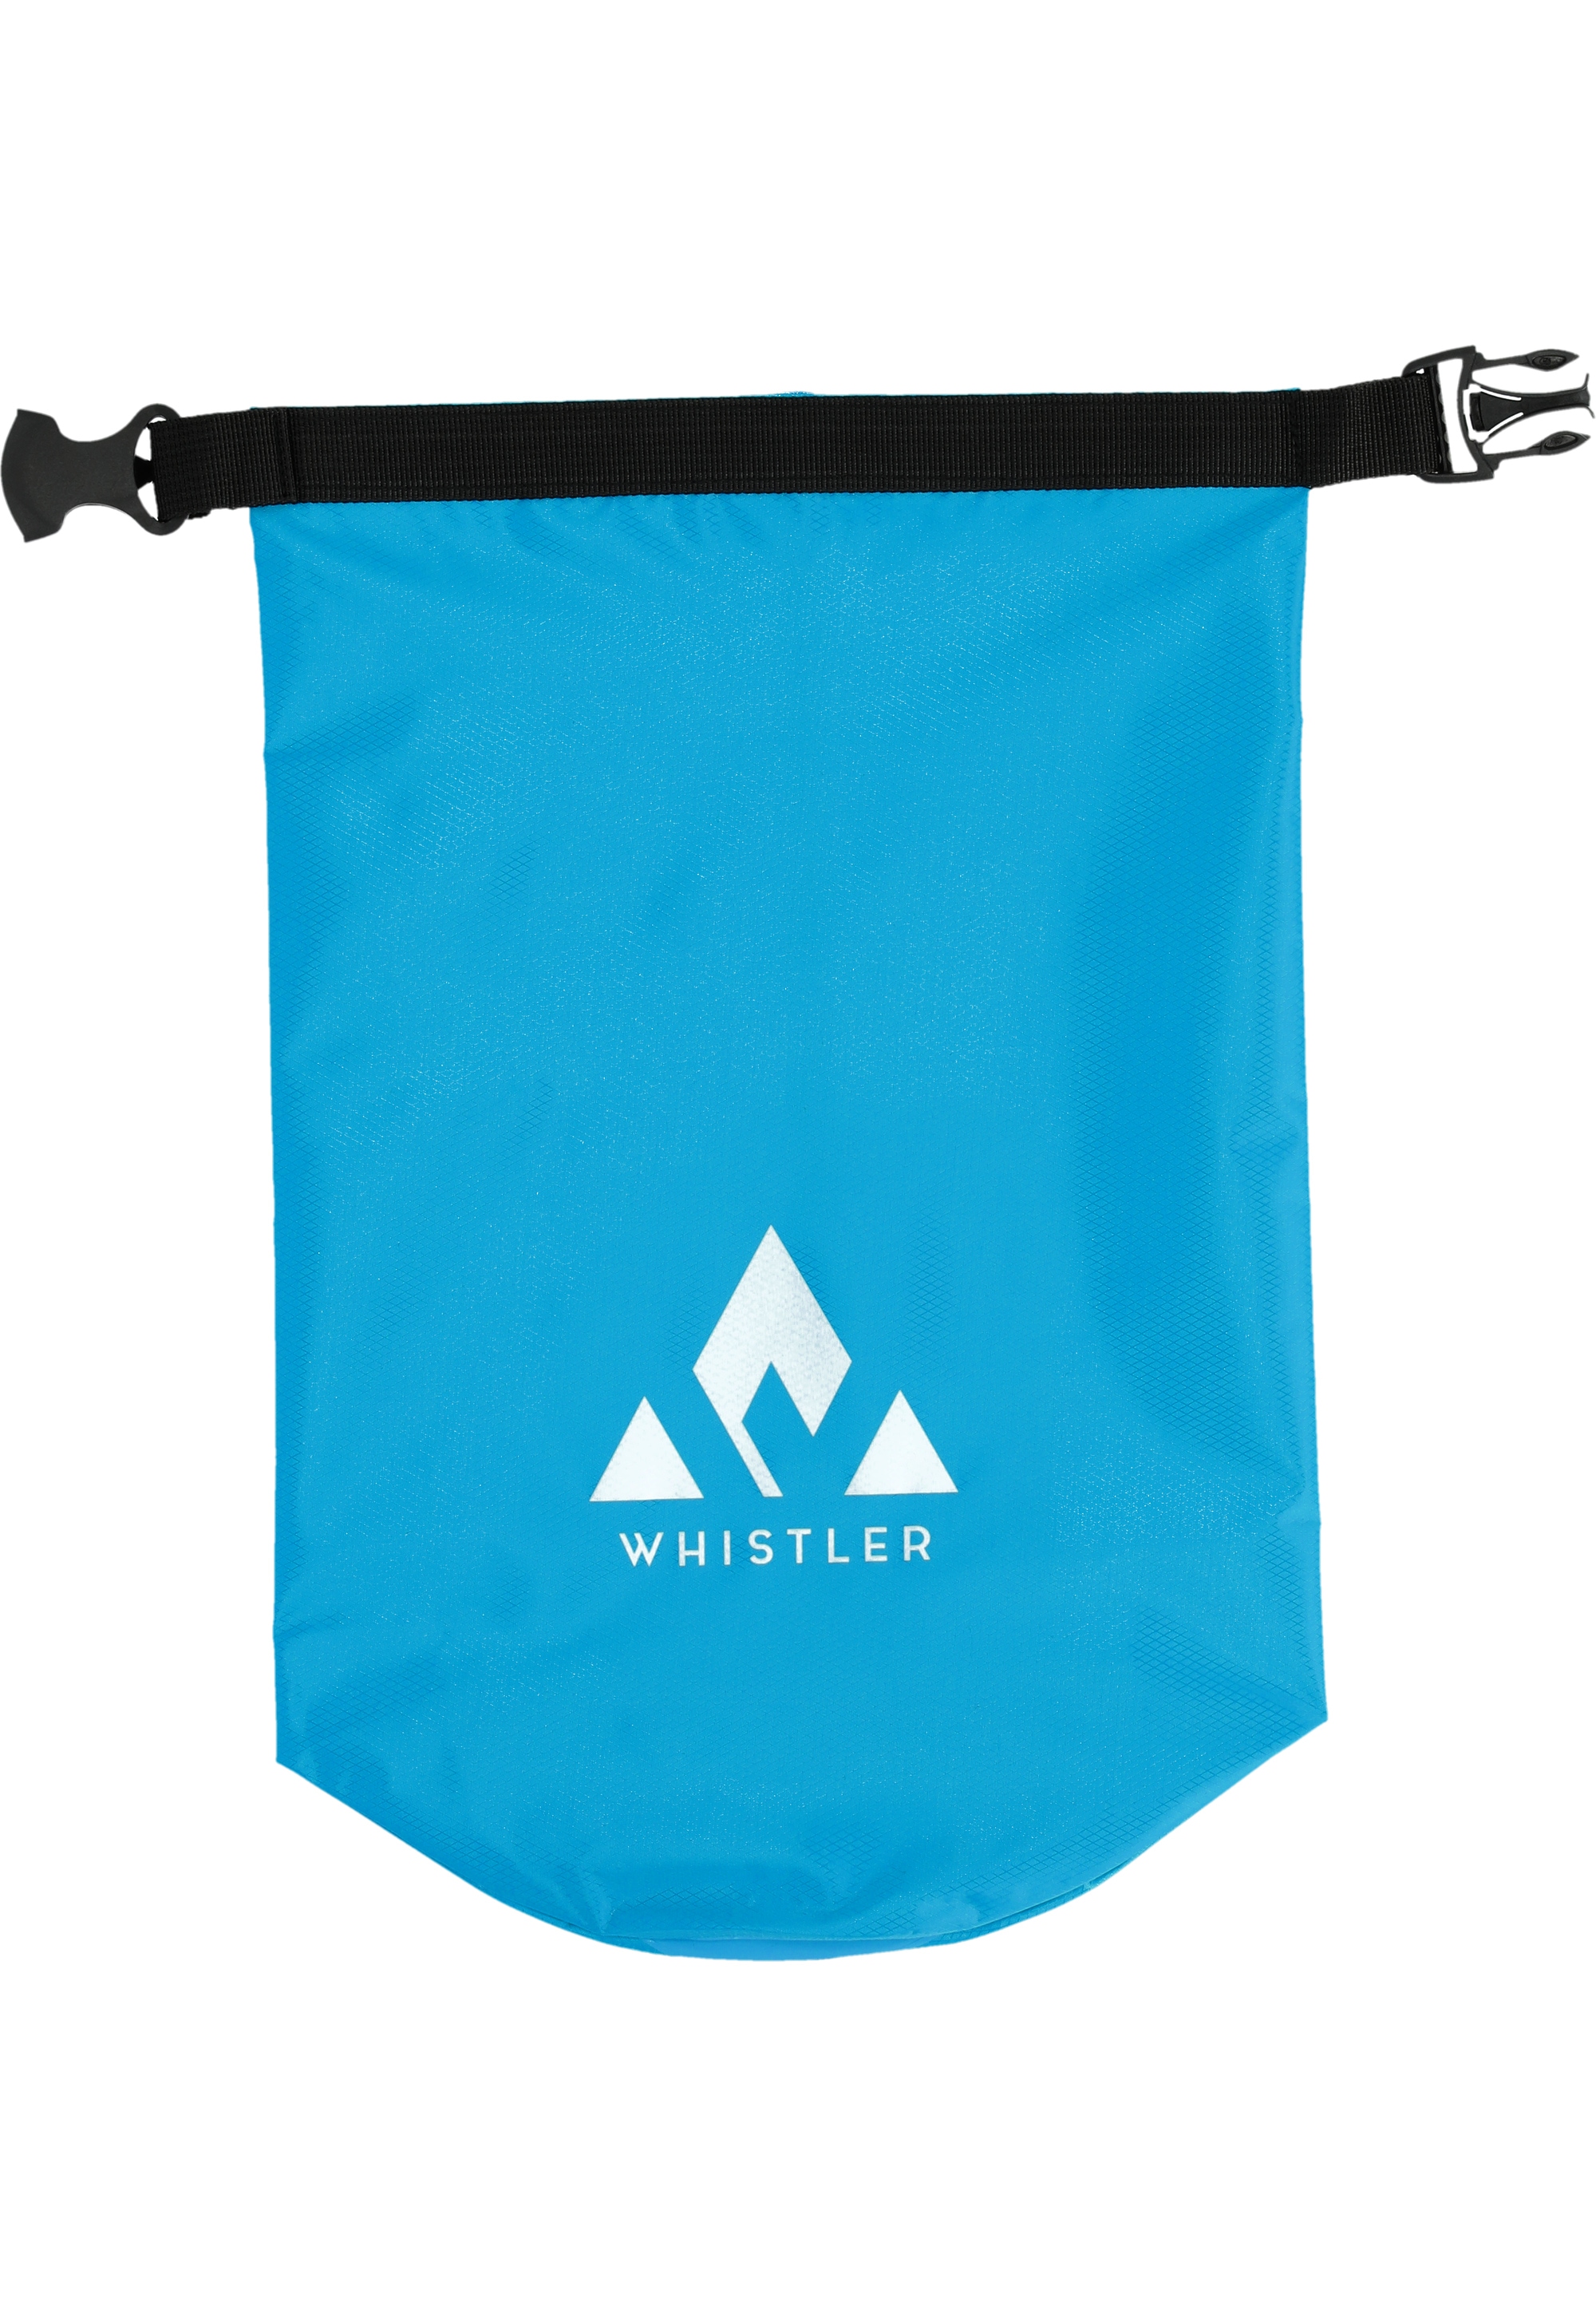 WHISTLER Drybag »Tonto 5L«, aus wasserdichtem Material